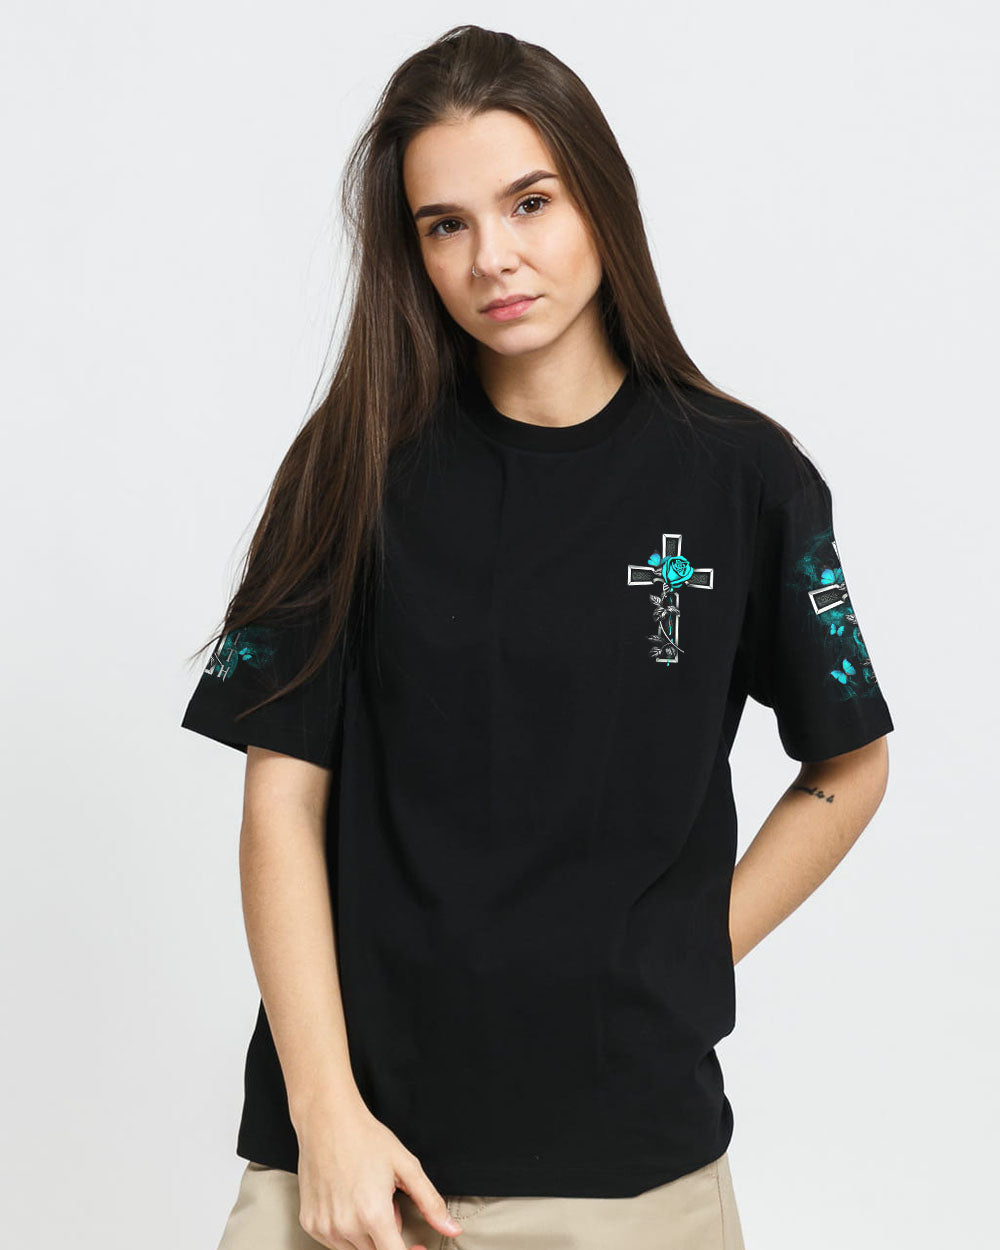 I Can Only Imagine Teal Rose Cross Women's Christian Tshirt